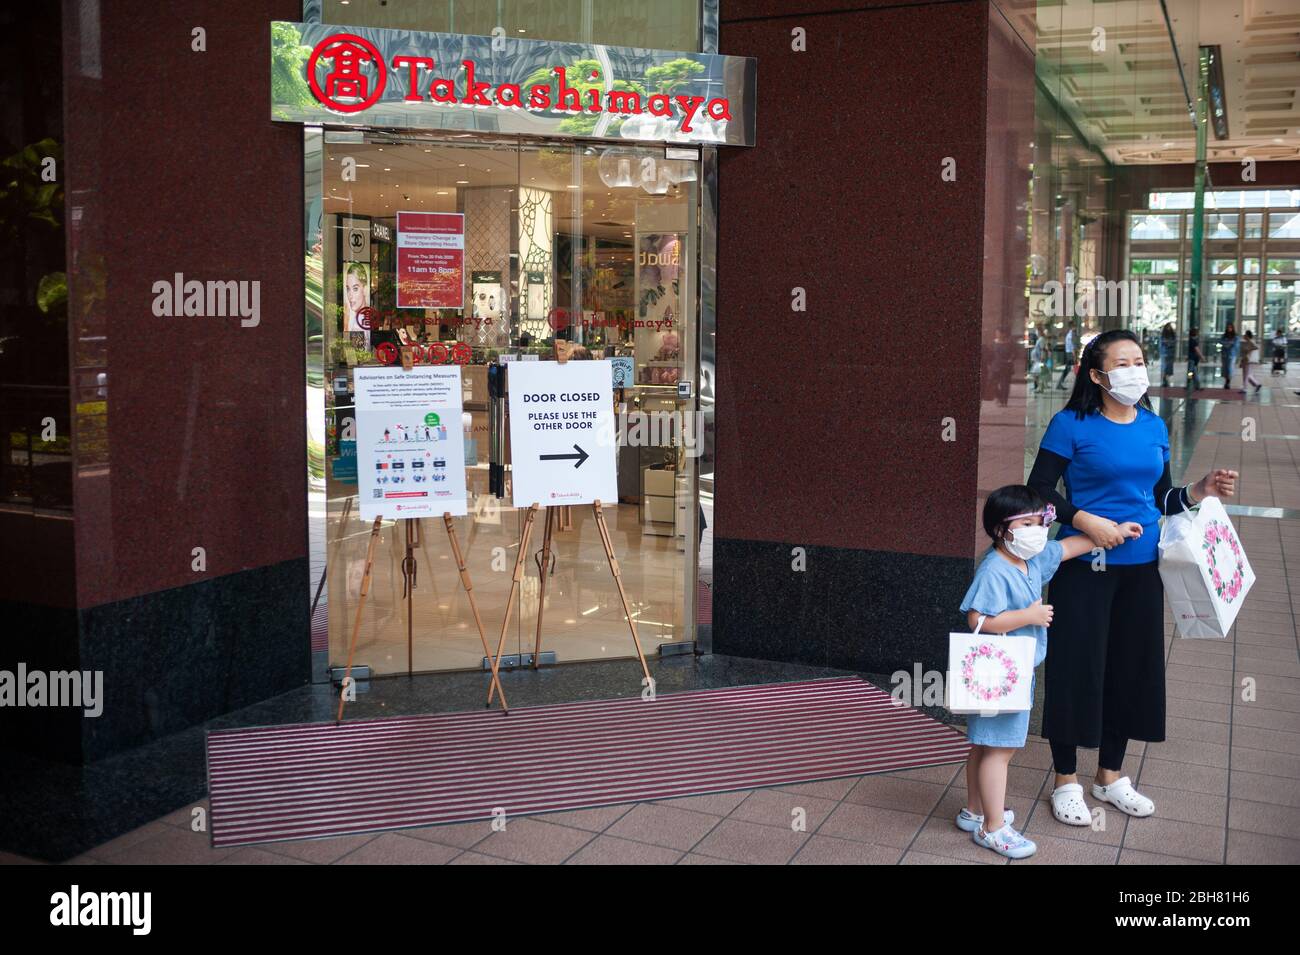 SINGAPORE. 2011. Takashimaya Department Store Stock Photo - Alamy